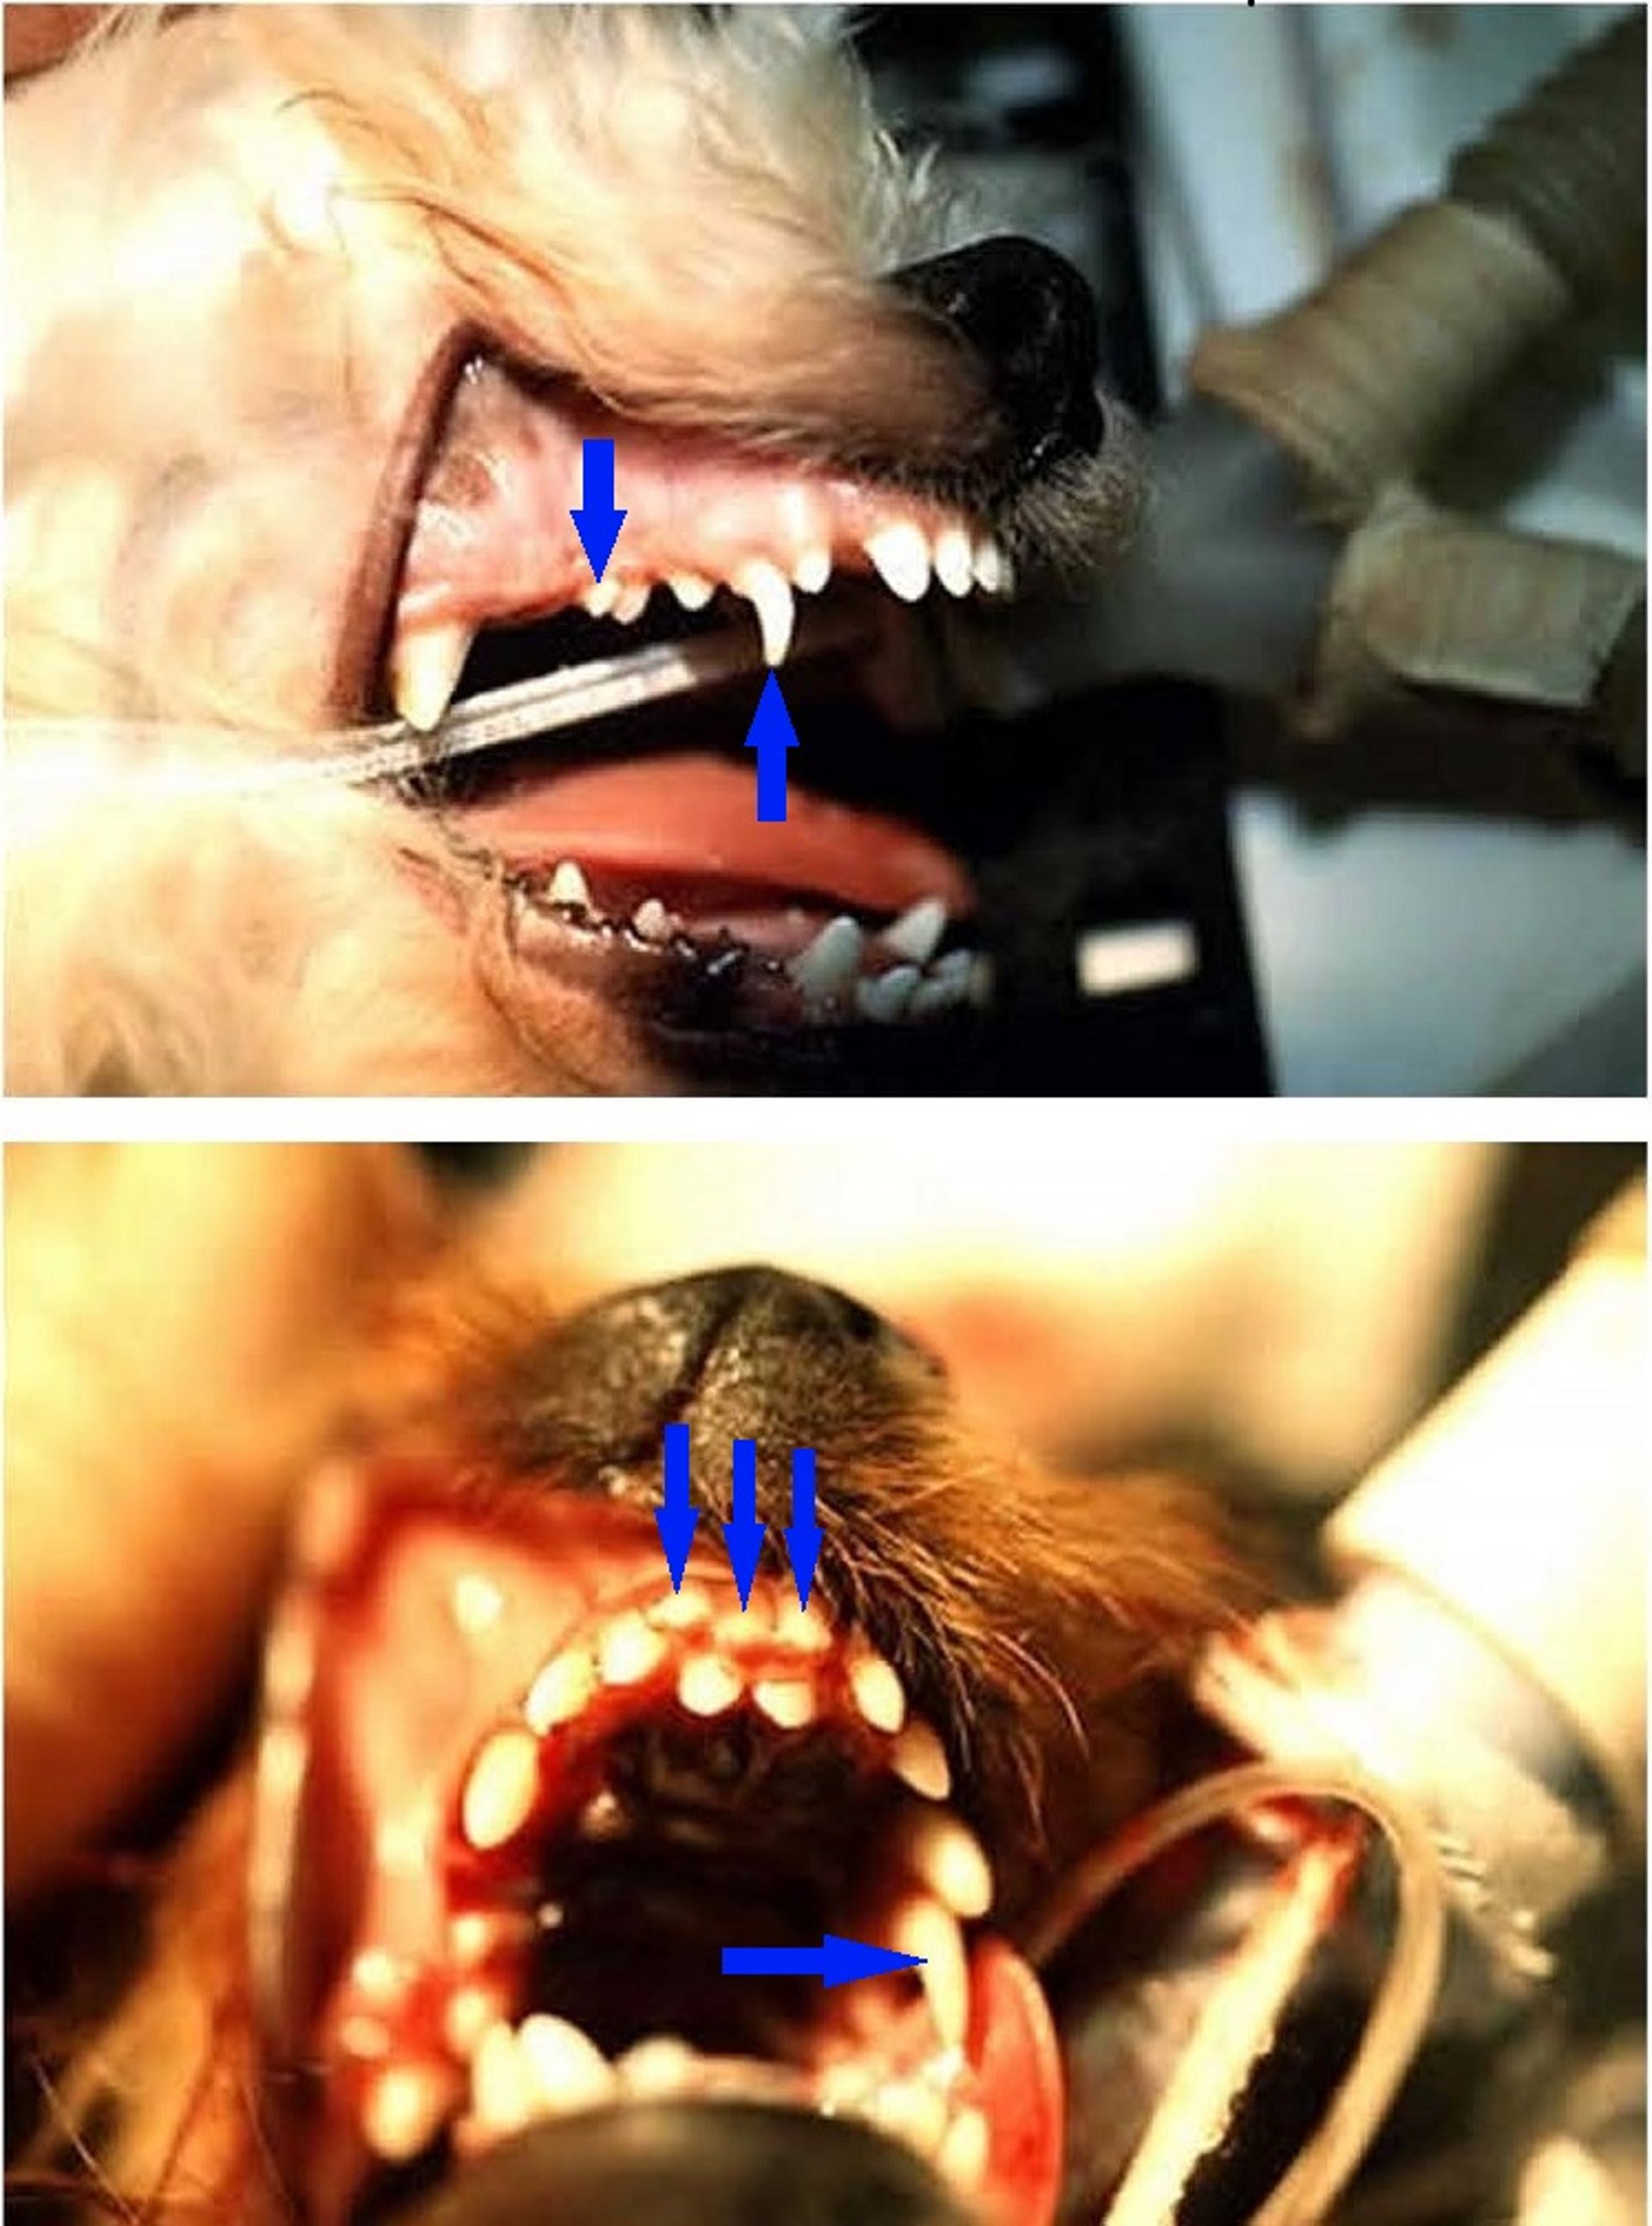 Retained deciduous teeth, dog